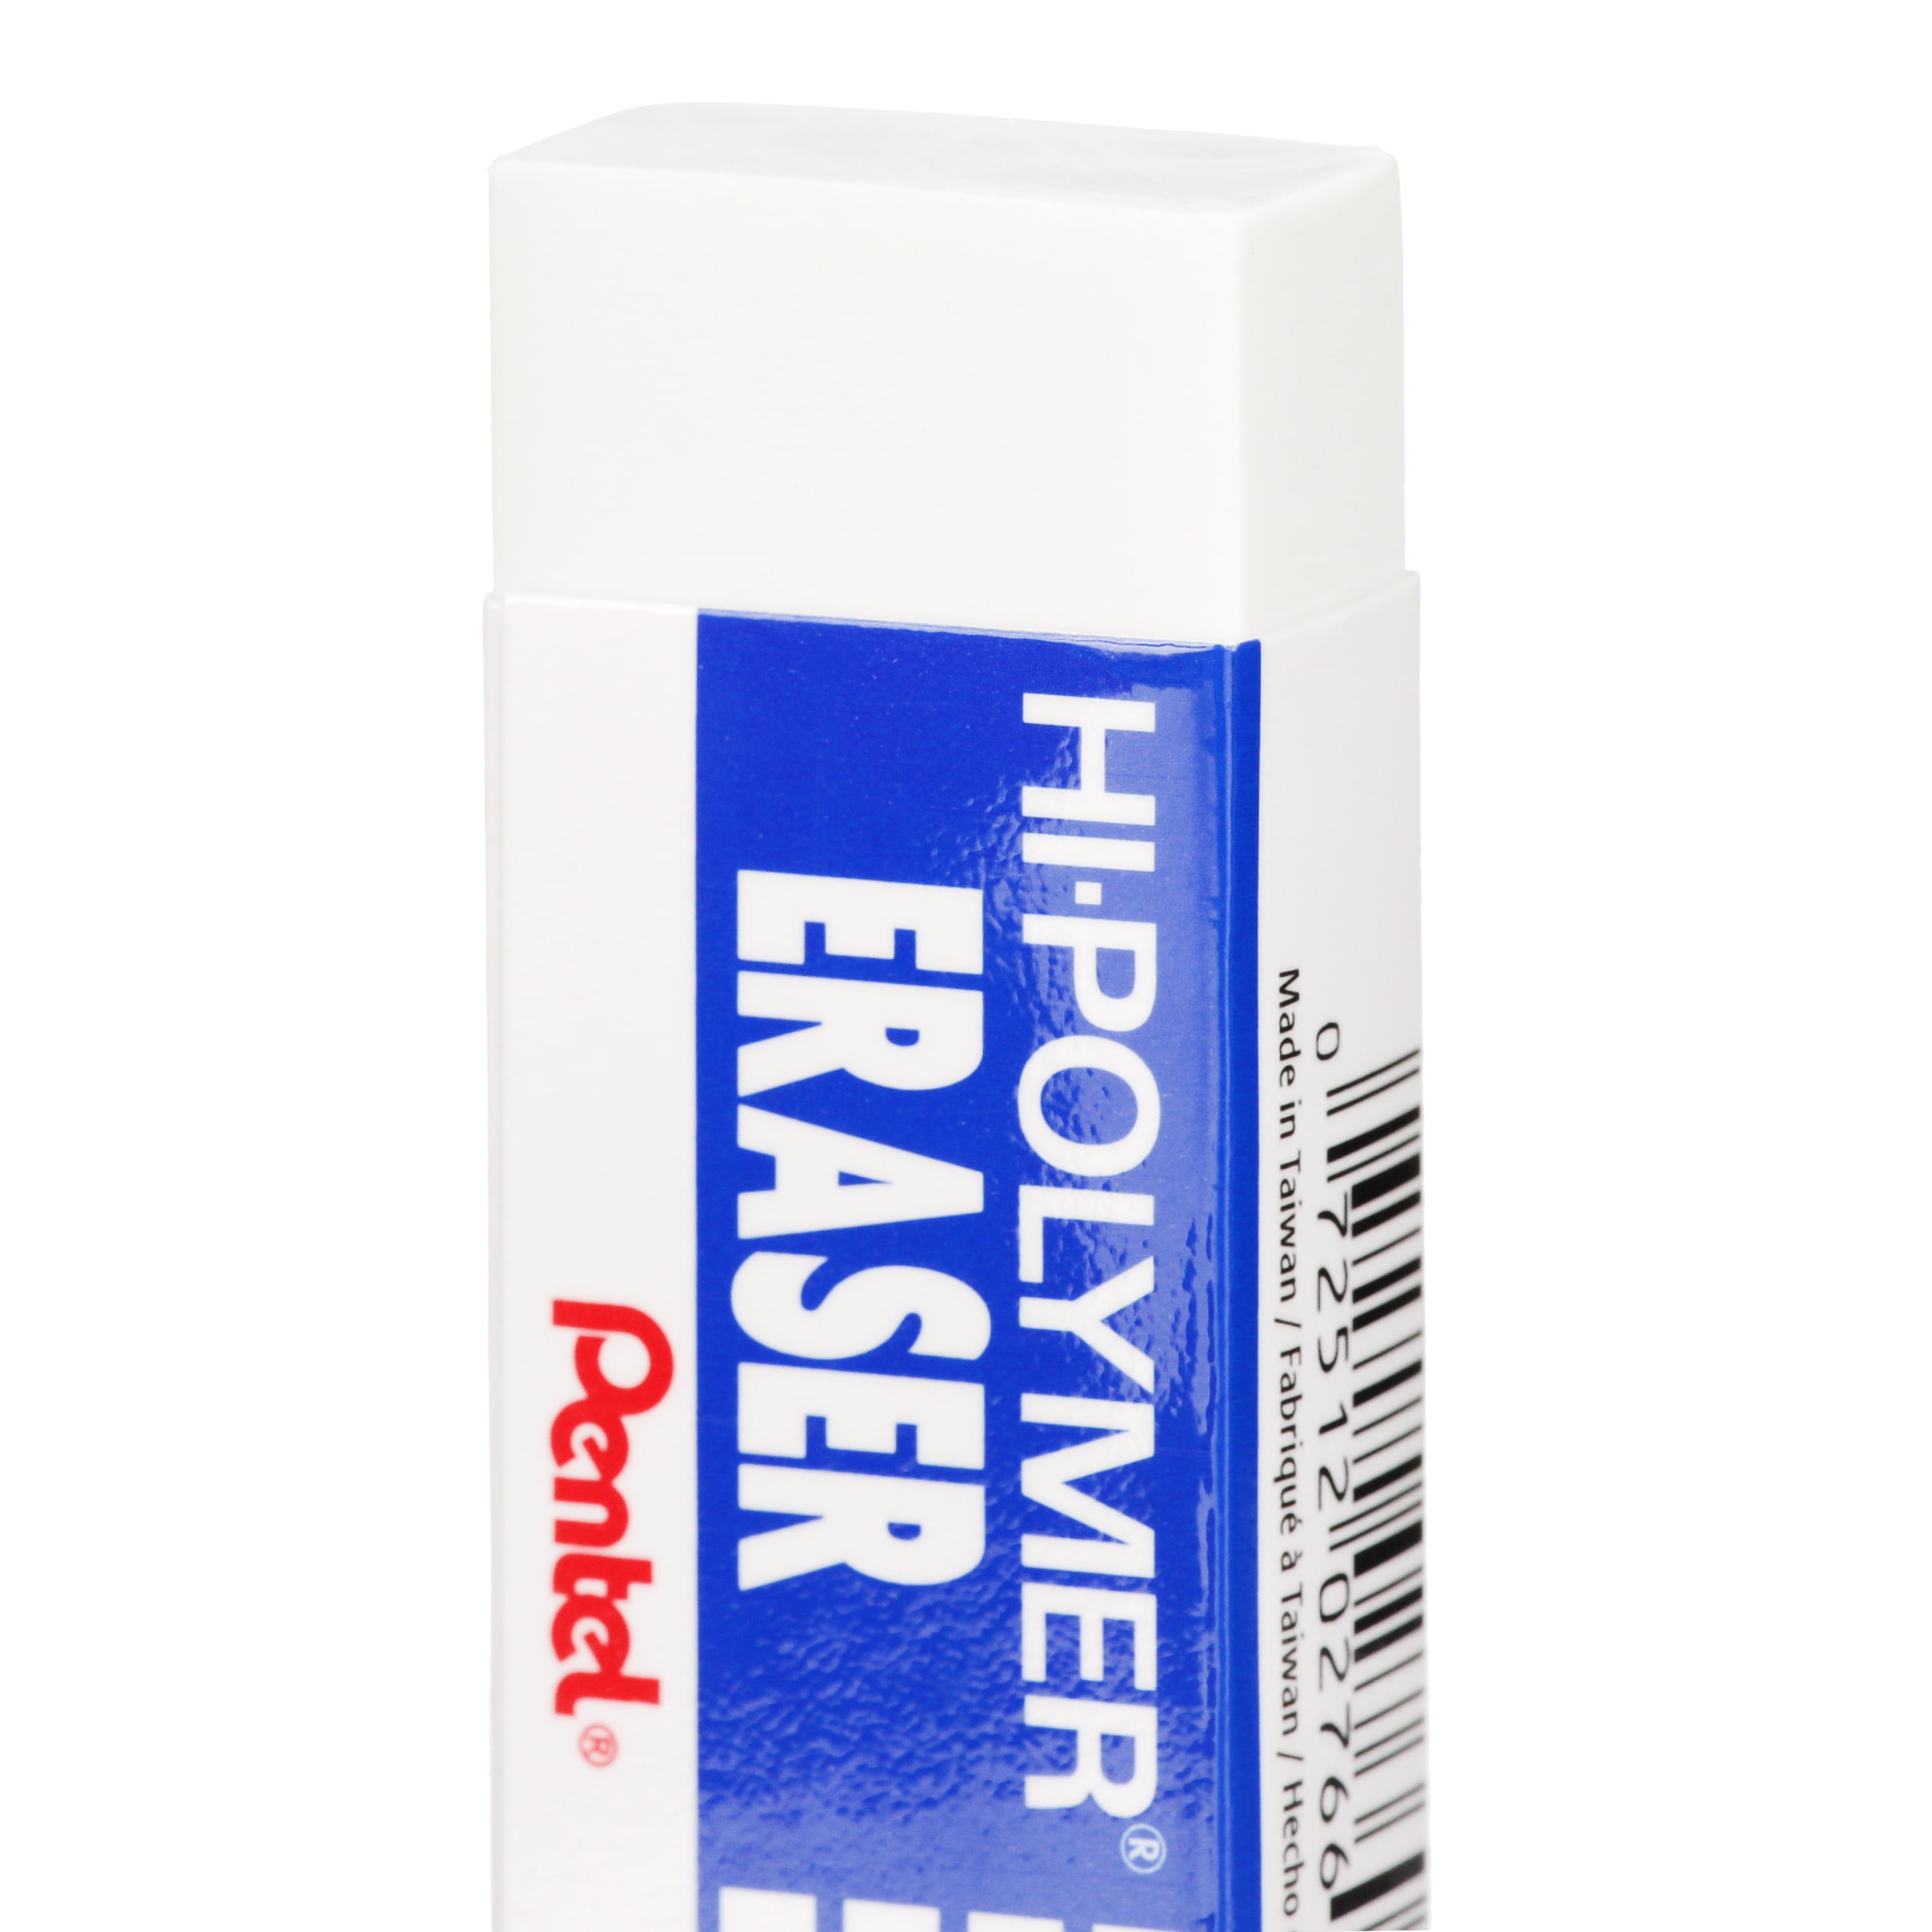 Pentel Hi Polymer Block Eraser White Pack Of 14 - Office Depot